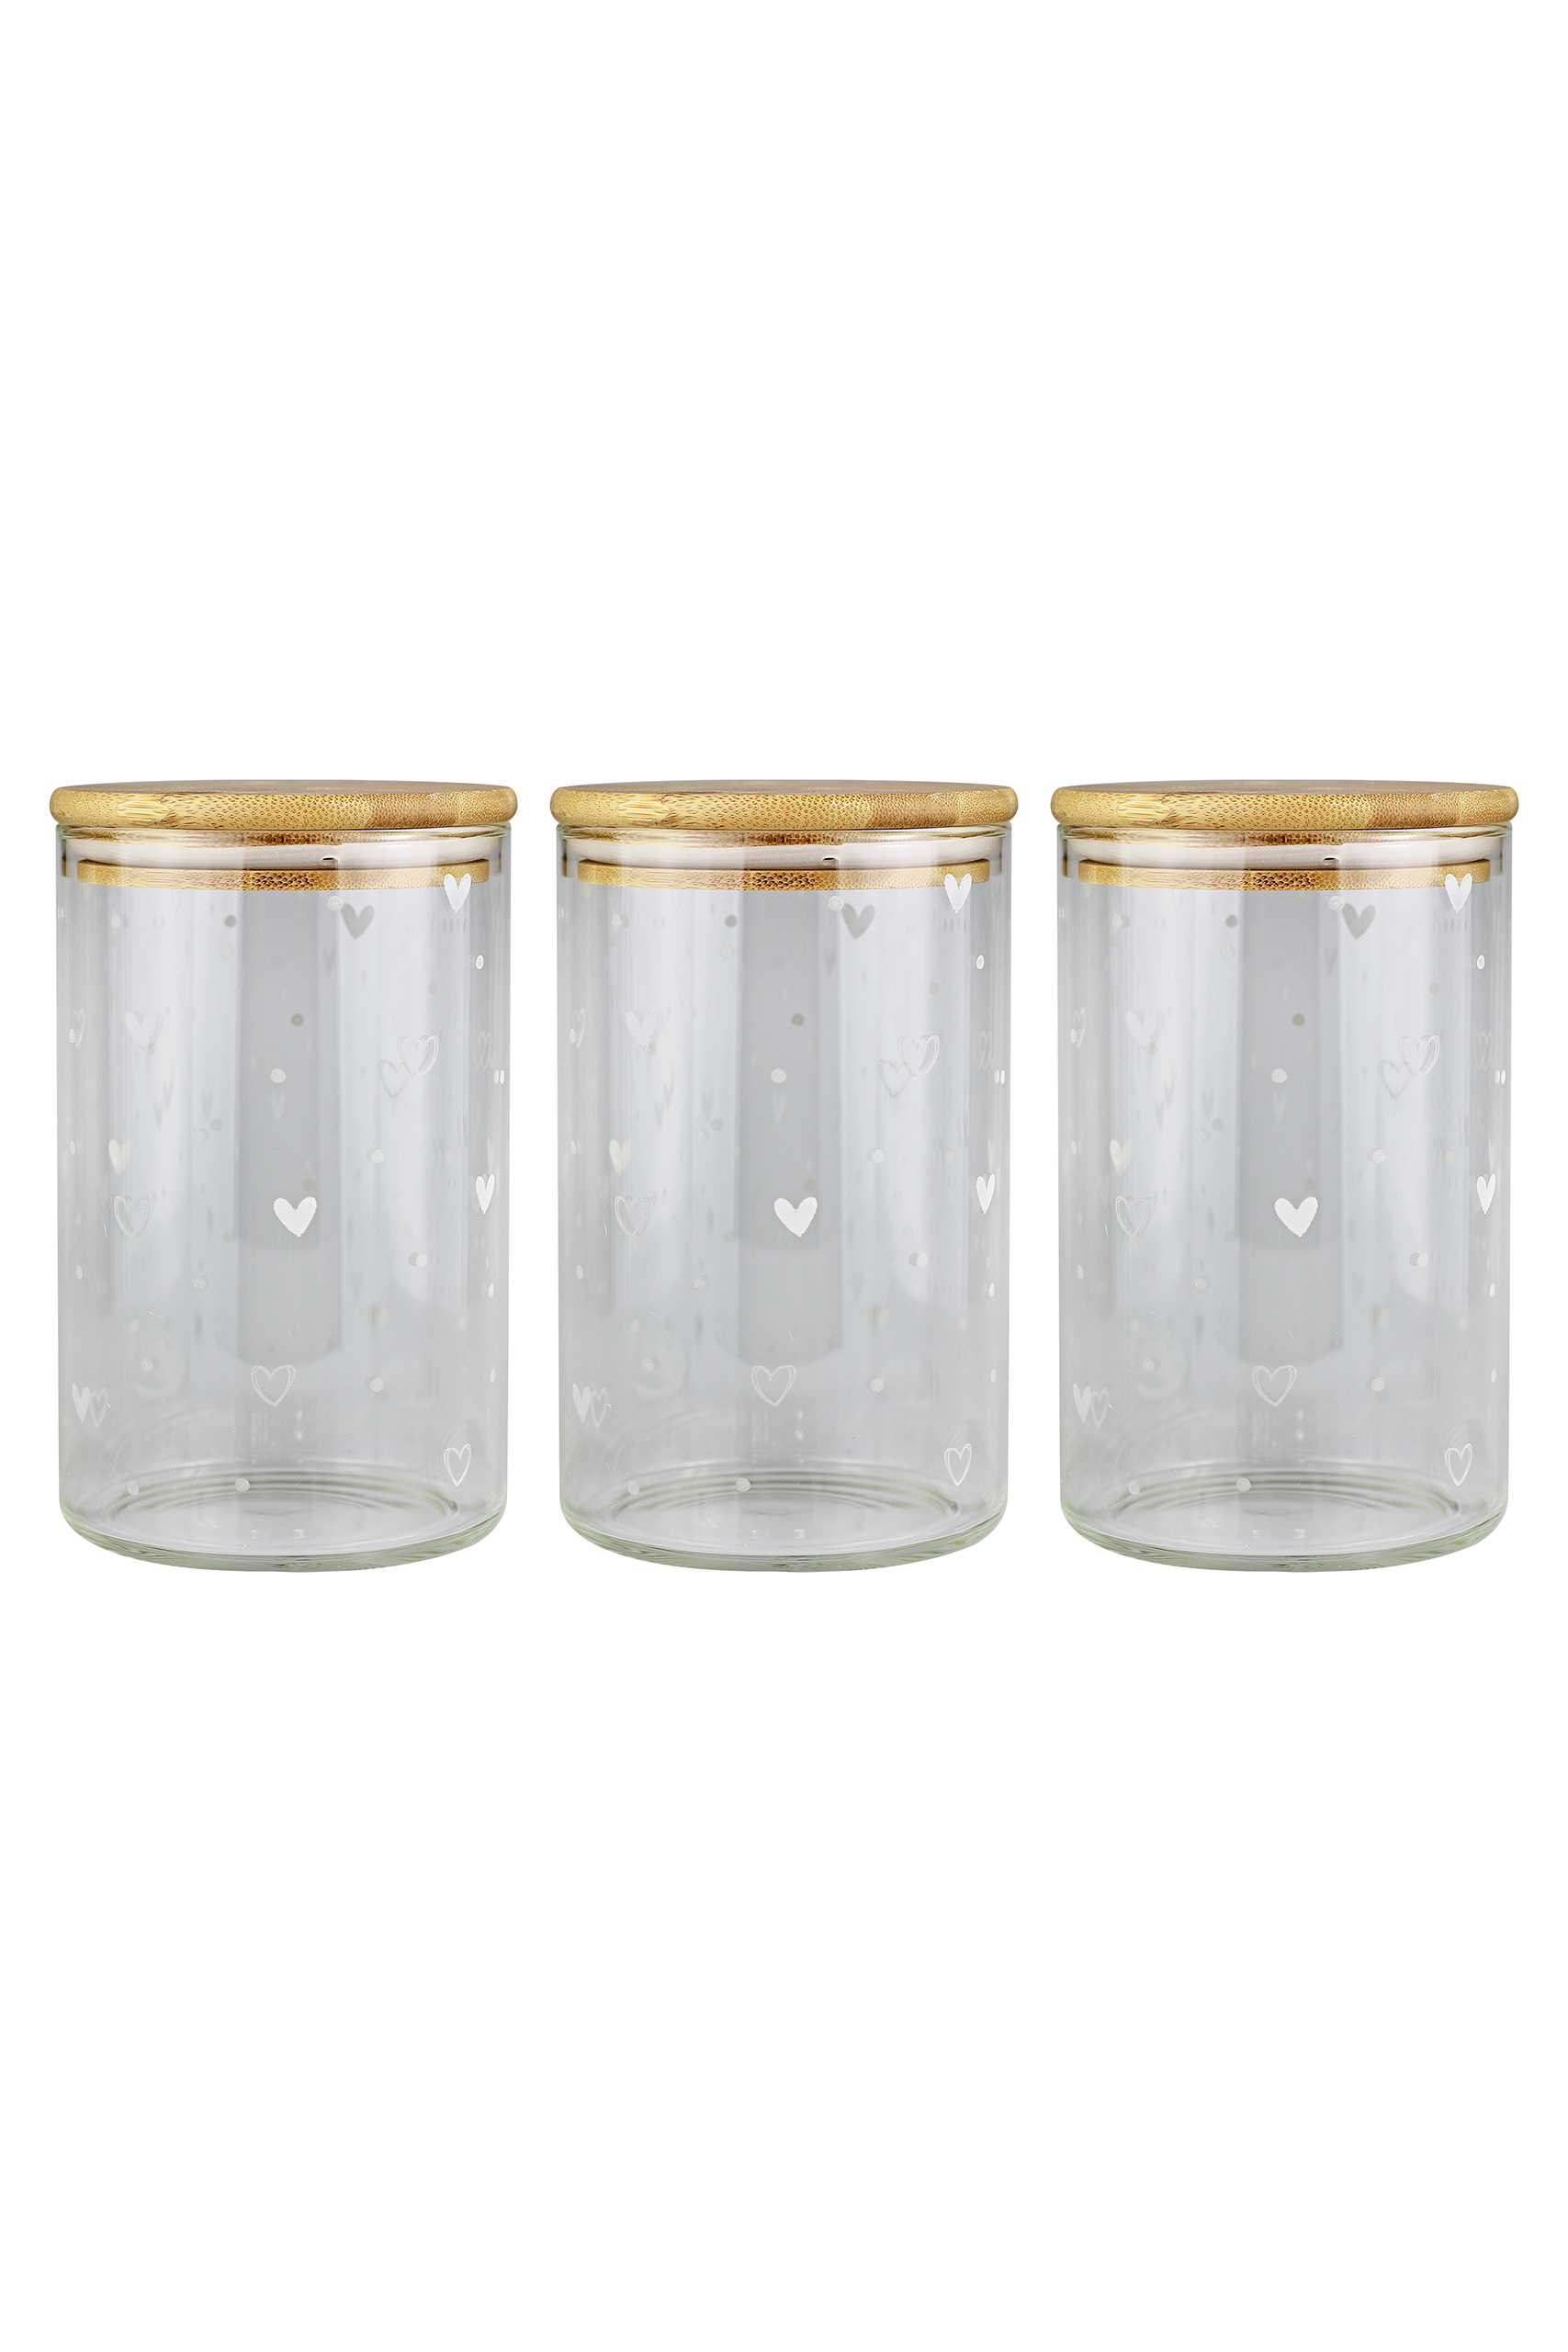 Set 3 Glass Multi Heart & Dots Bamboo Storage Jars -Natural Lid 1000ml | Pretty Little Home